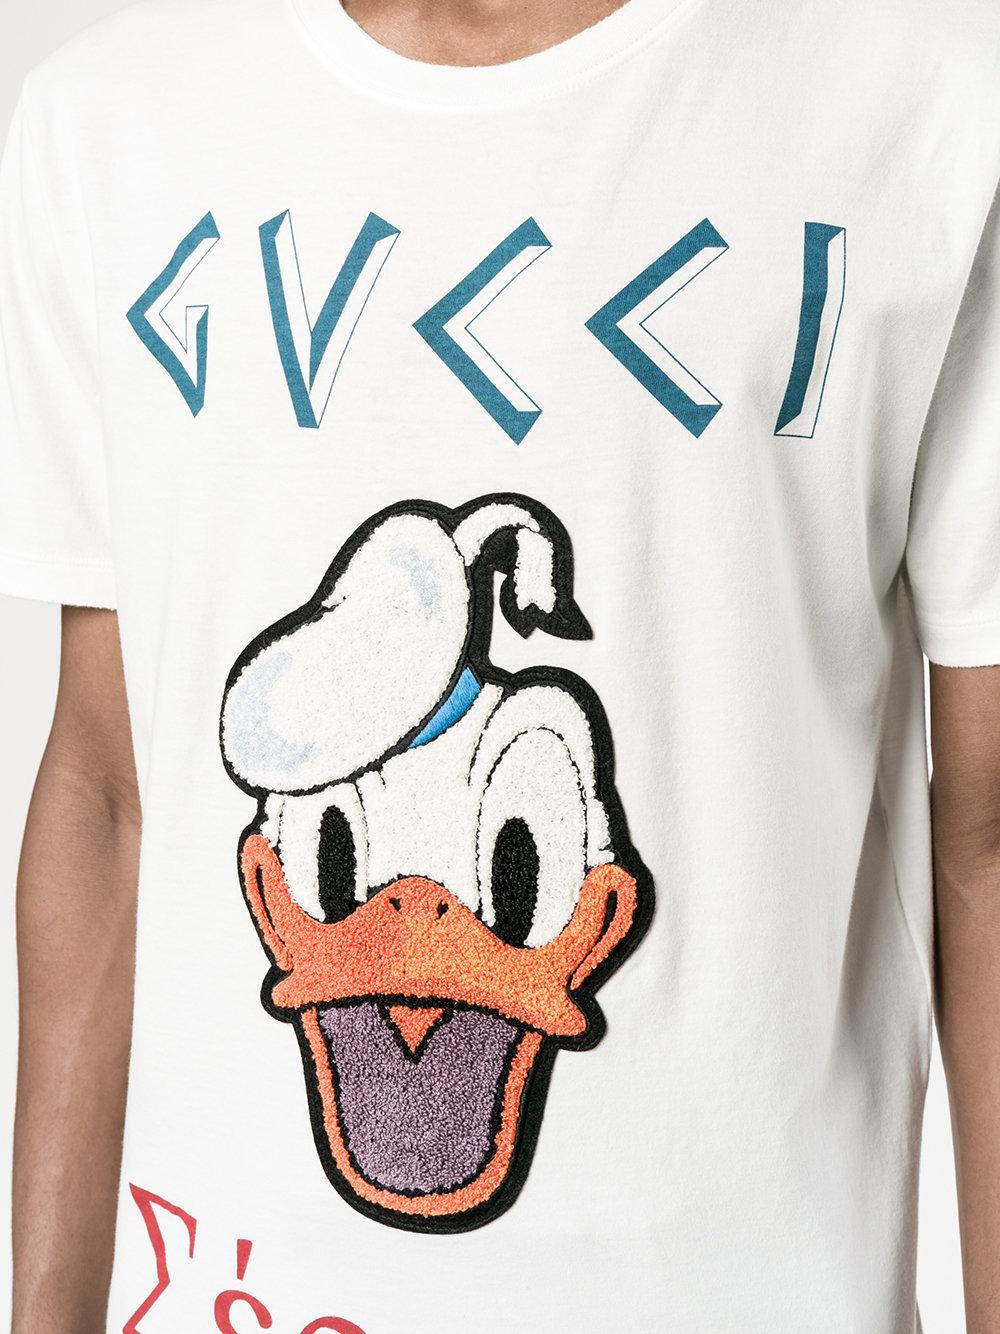 donald duck gucci t shirt